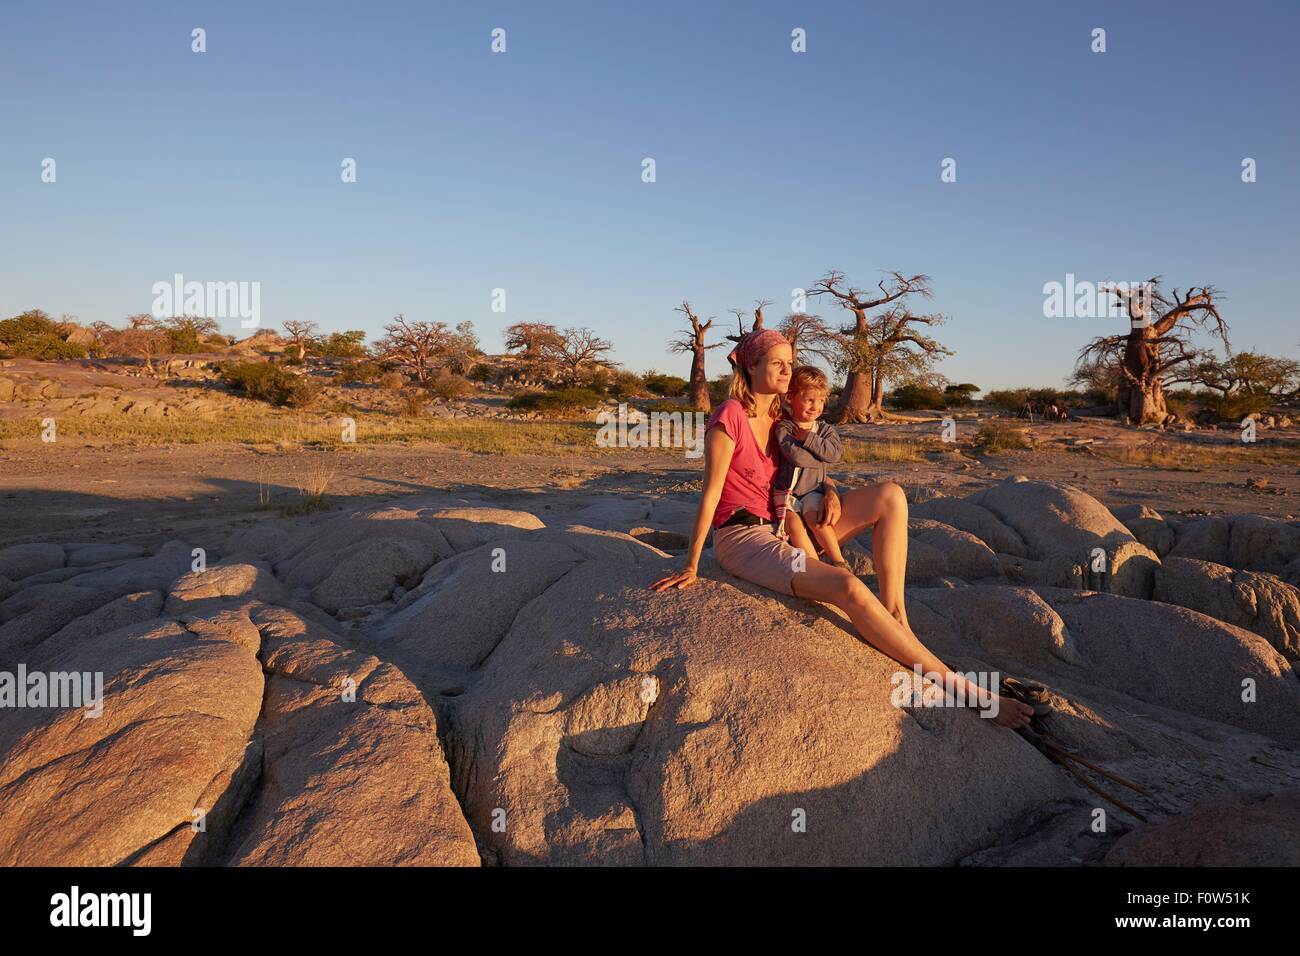 Mother and son sitting on rock, looking at view, Gweta, makgadikgadi, Botswana Stock Photo